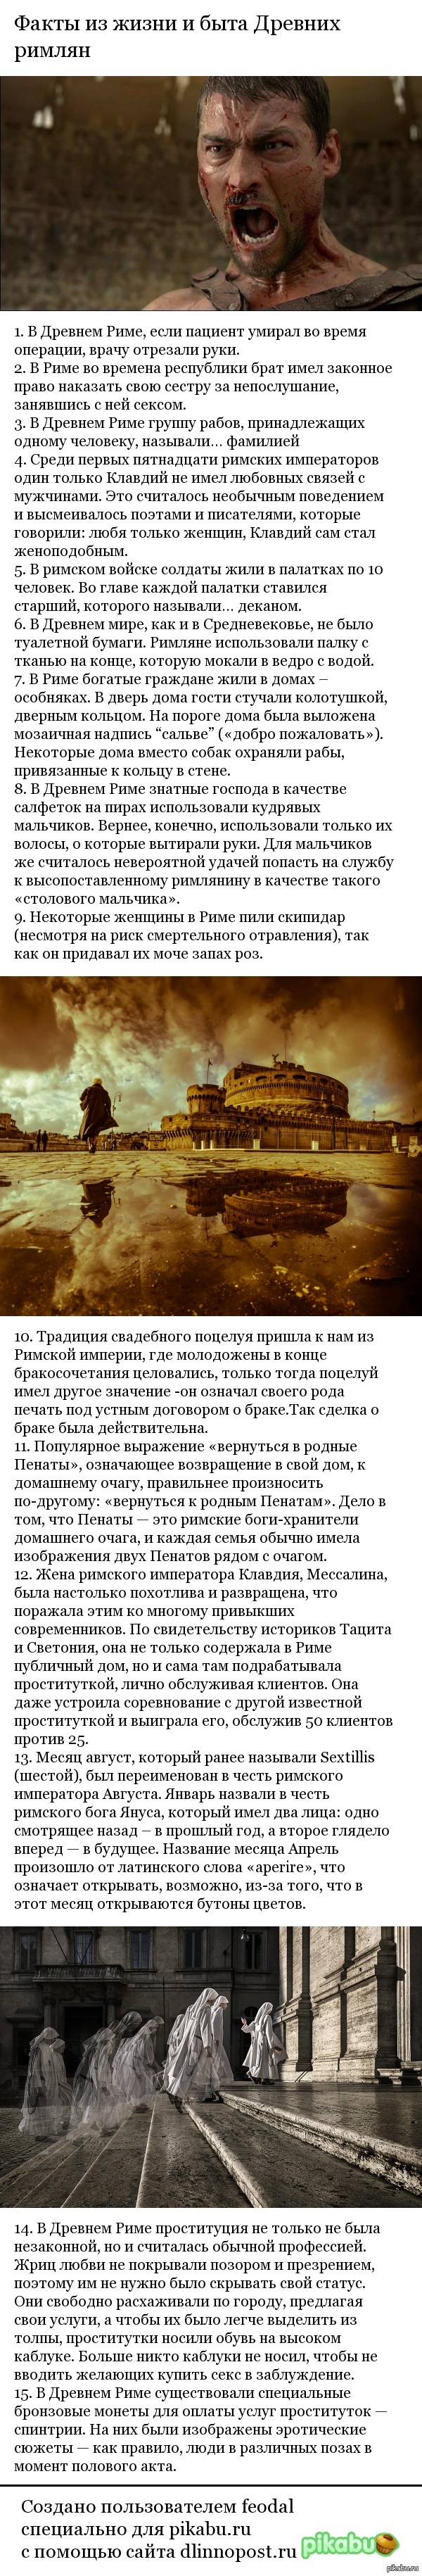 http://s6.pikabu.ru/post_img/2014/09/02/4/1409632282_1424451292.jpg